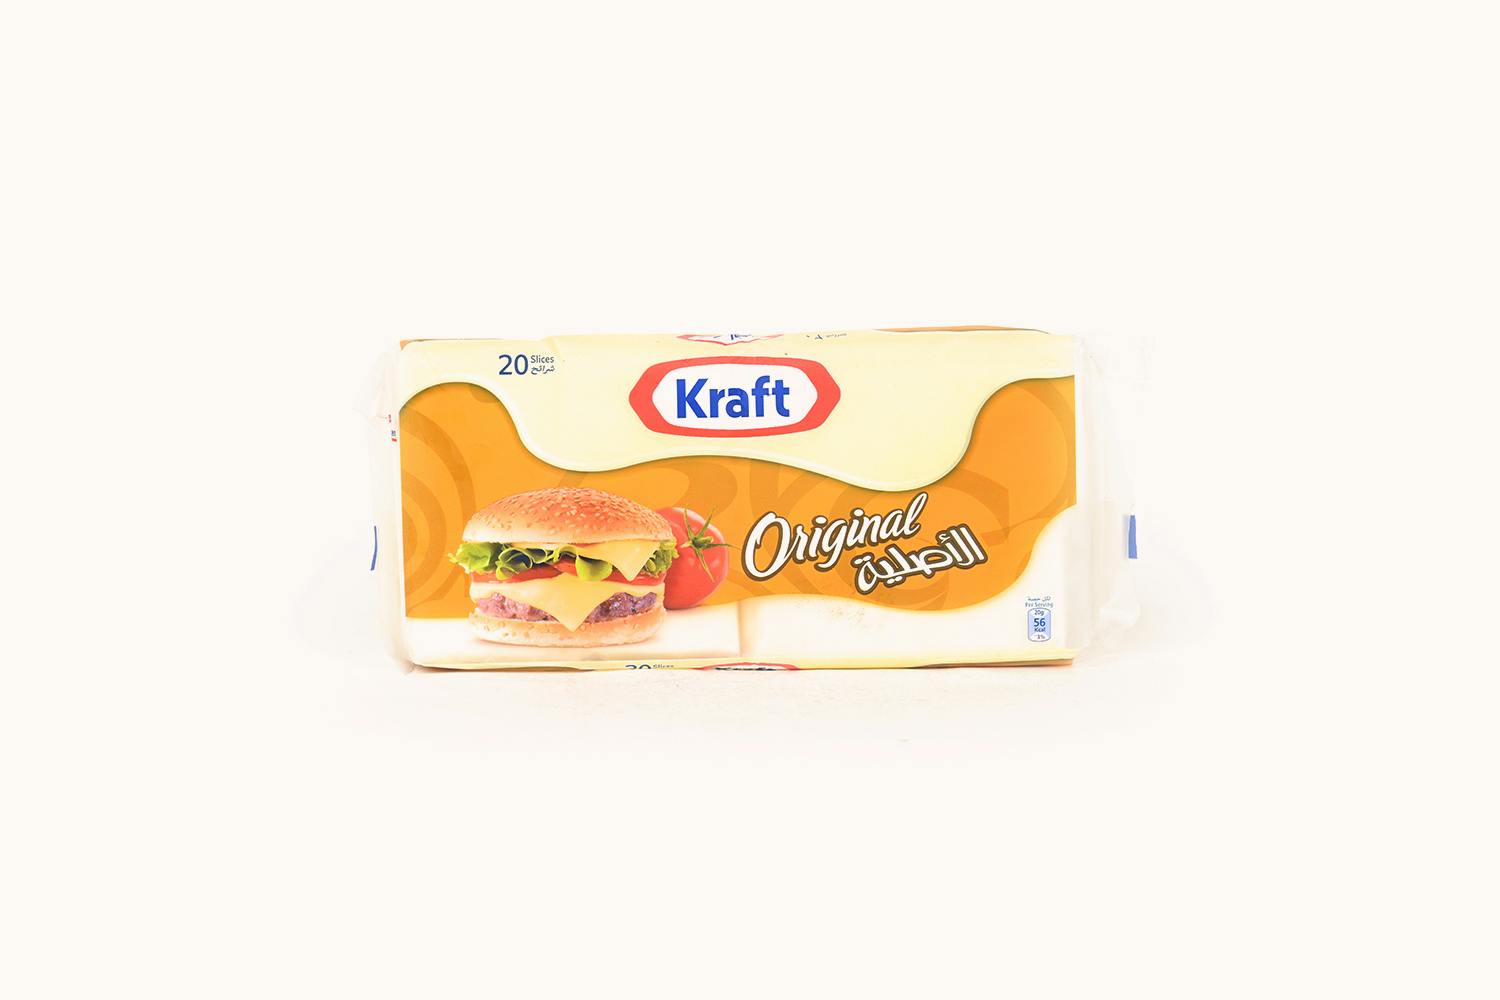 Kraft Original Cheese Slices